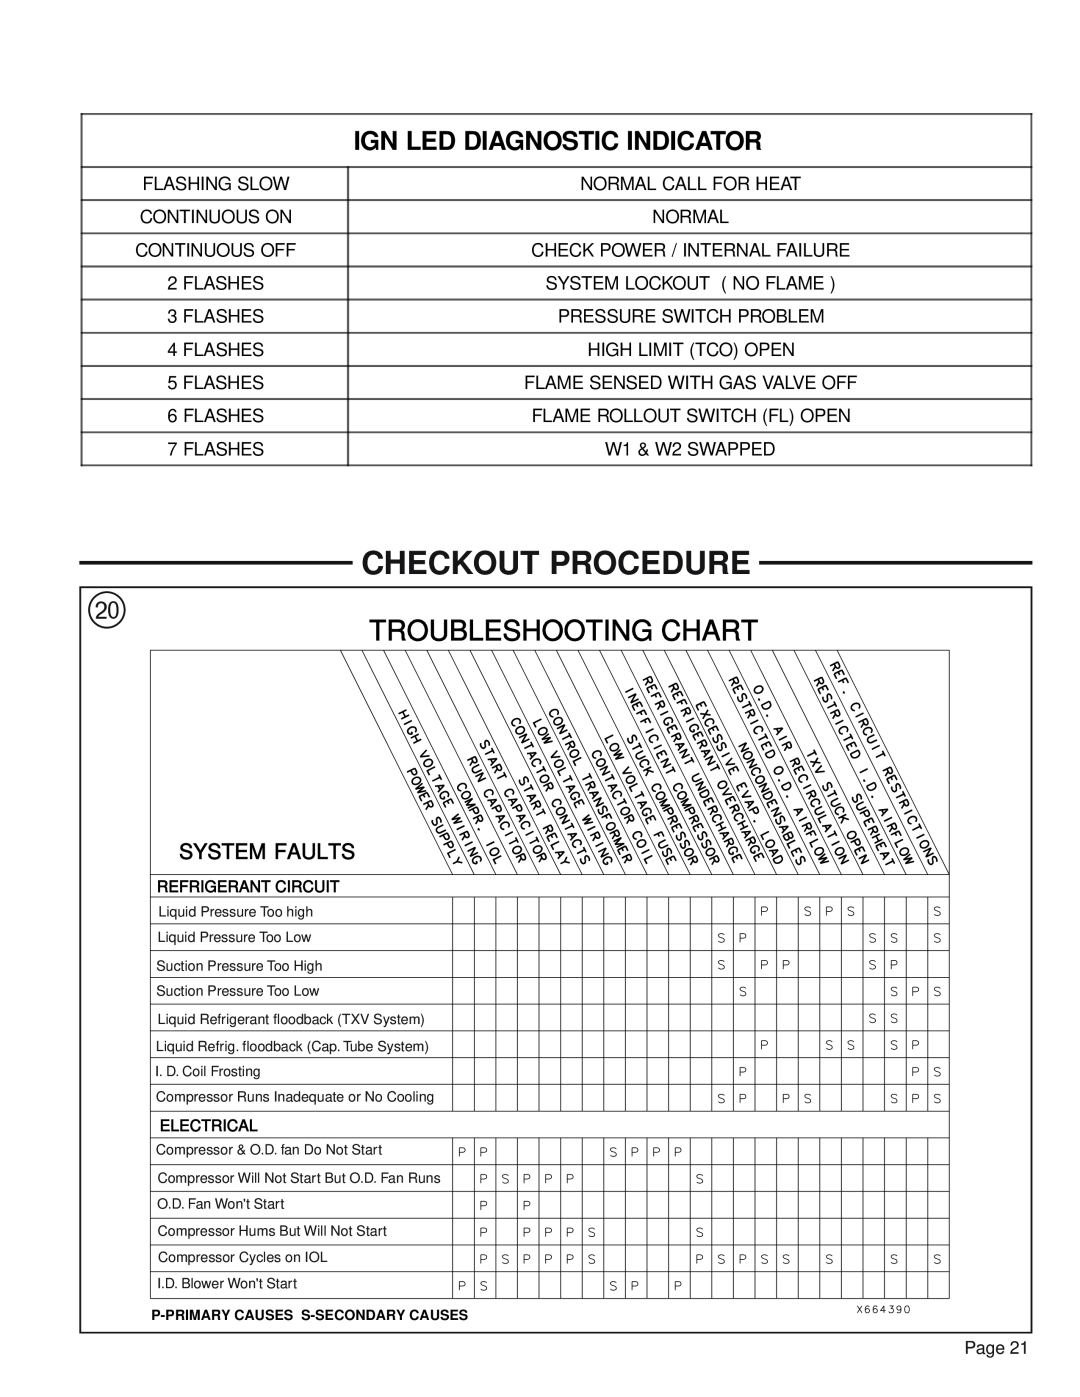 Trane YCZ036F1/3M0B, YCZ035F1 manual Checkout Procedure, Ign Led Diagnostic Indicator, System Faults, Troubleshooting Chart 